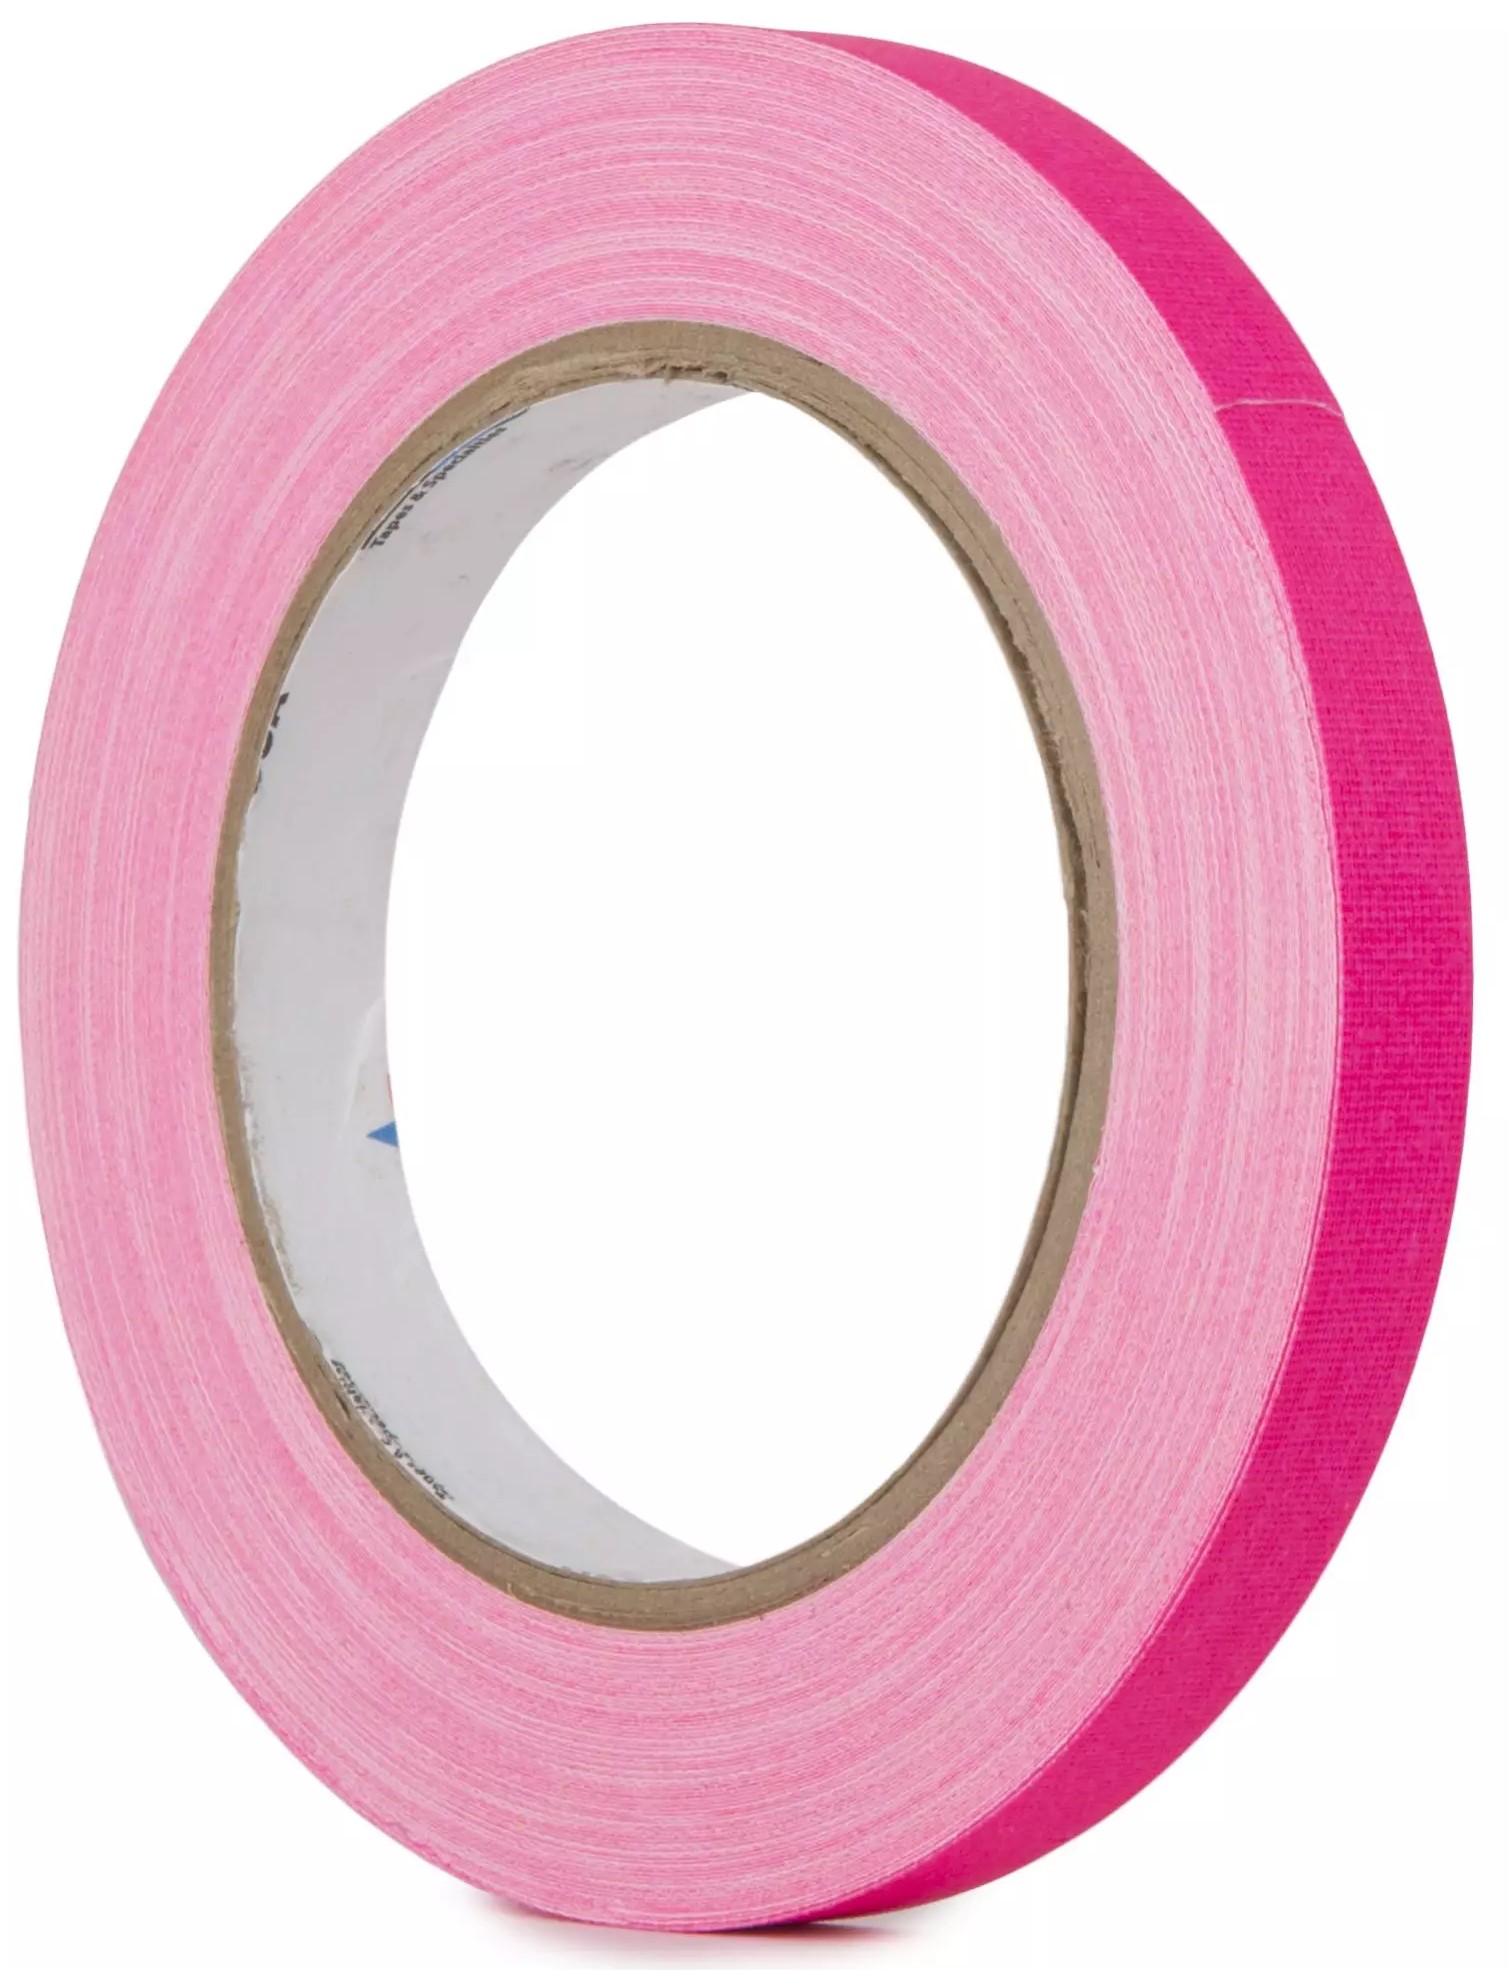 PRO-GAFF Glow Gaffatape 12mm x 22,8m - Flere farver Pink